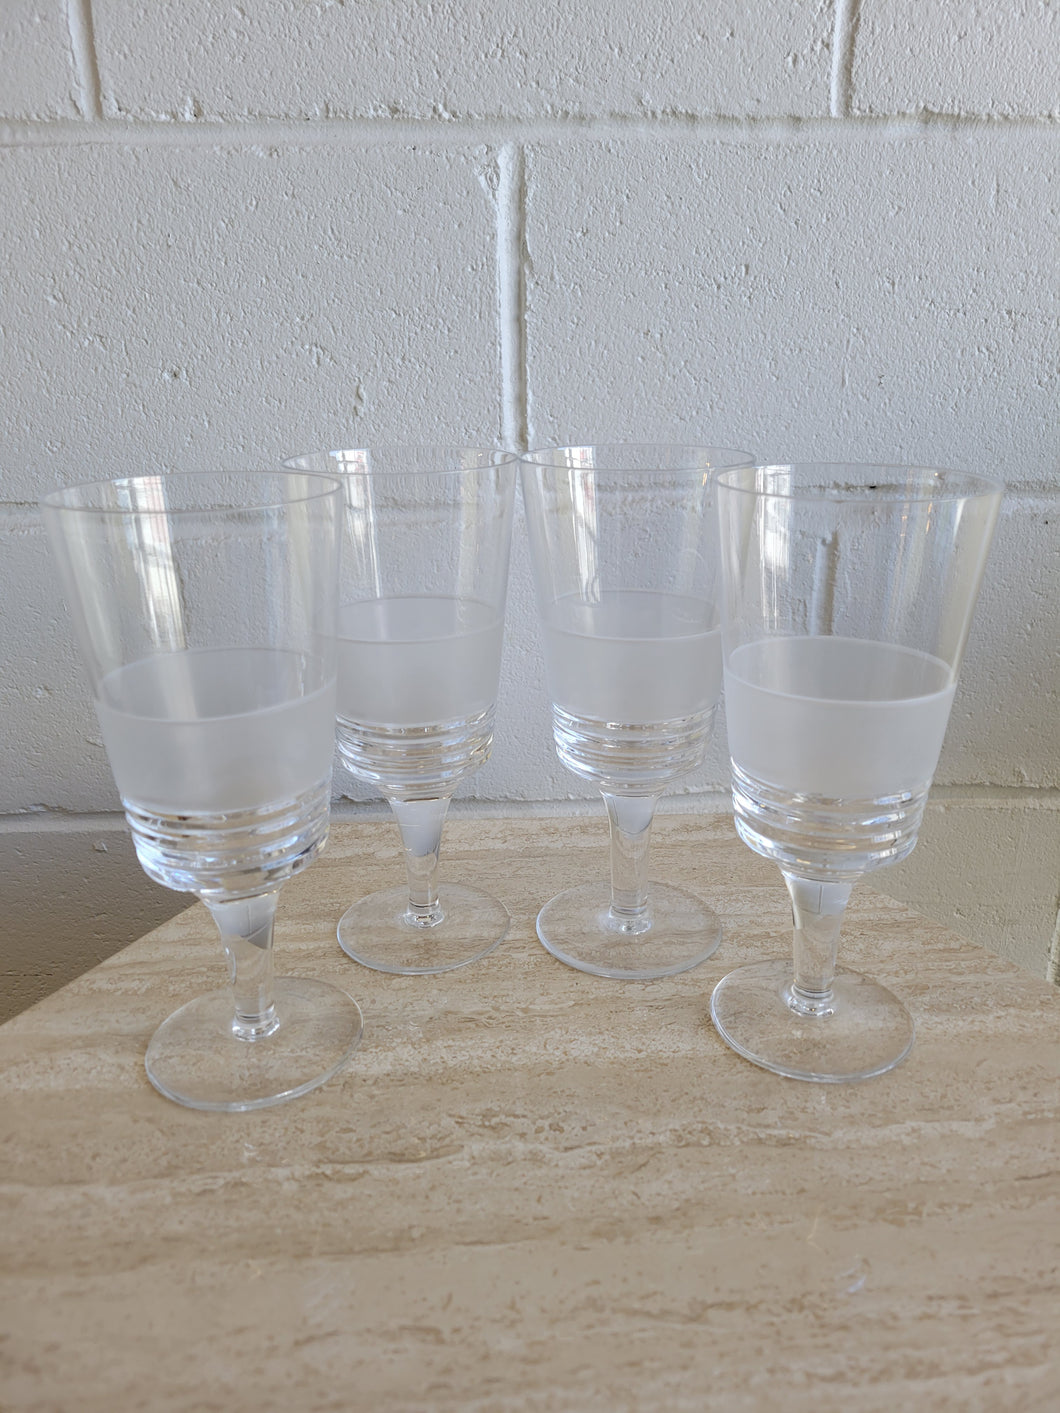 Set of 4 Etched Crystal Water Glasses by Miller Rogaska